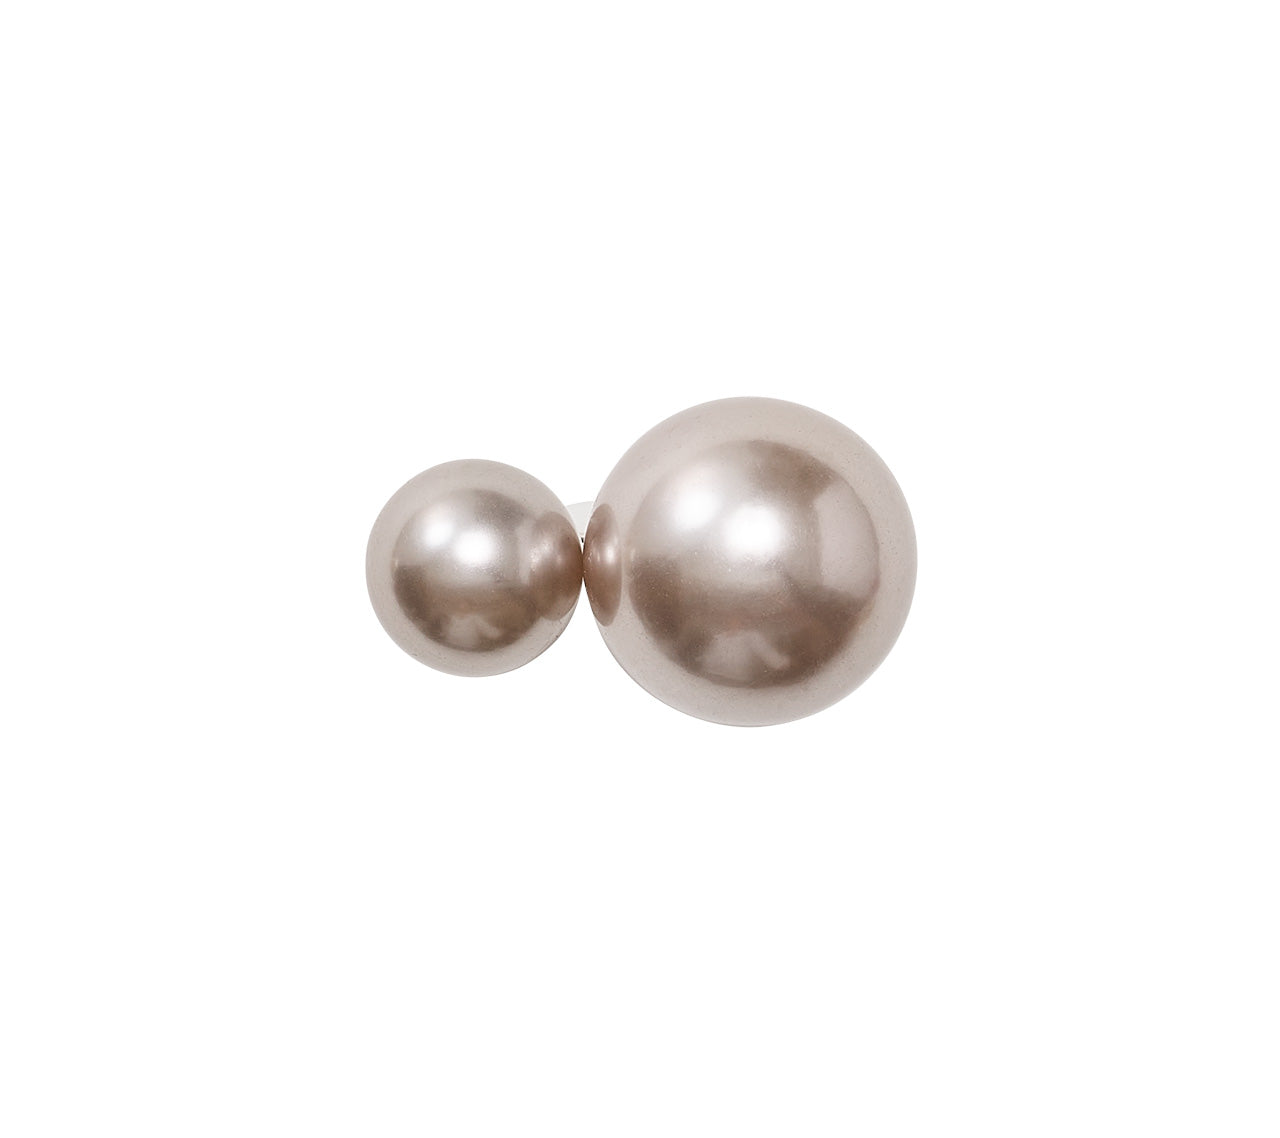 Kim Seybert Luxury Pearl Napkin Ring in Gray & Silver